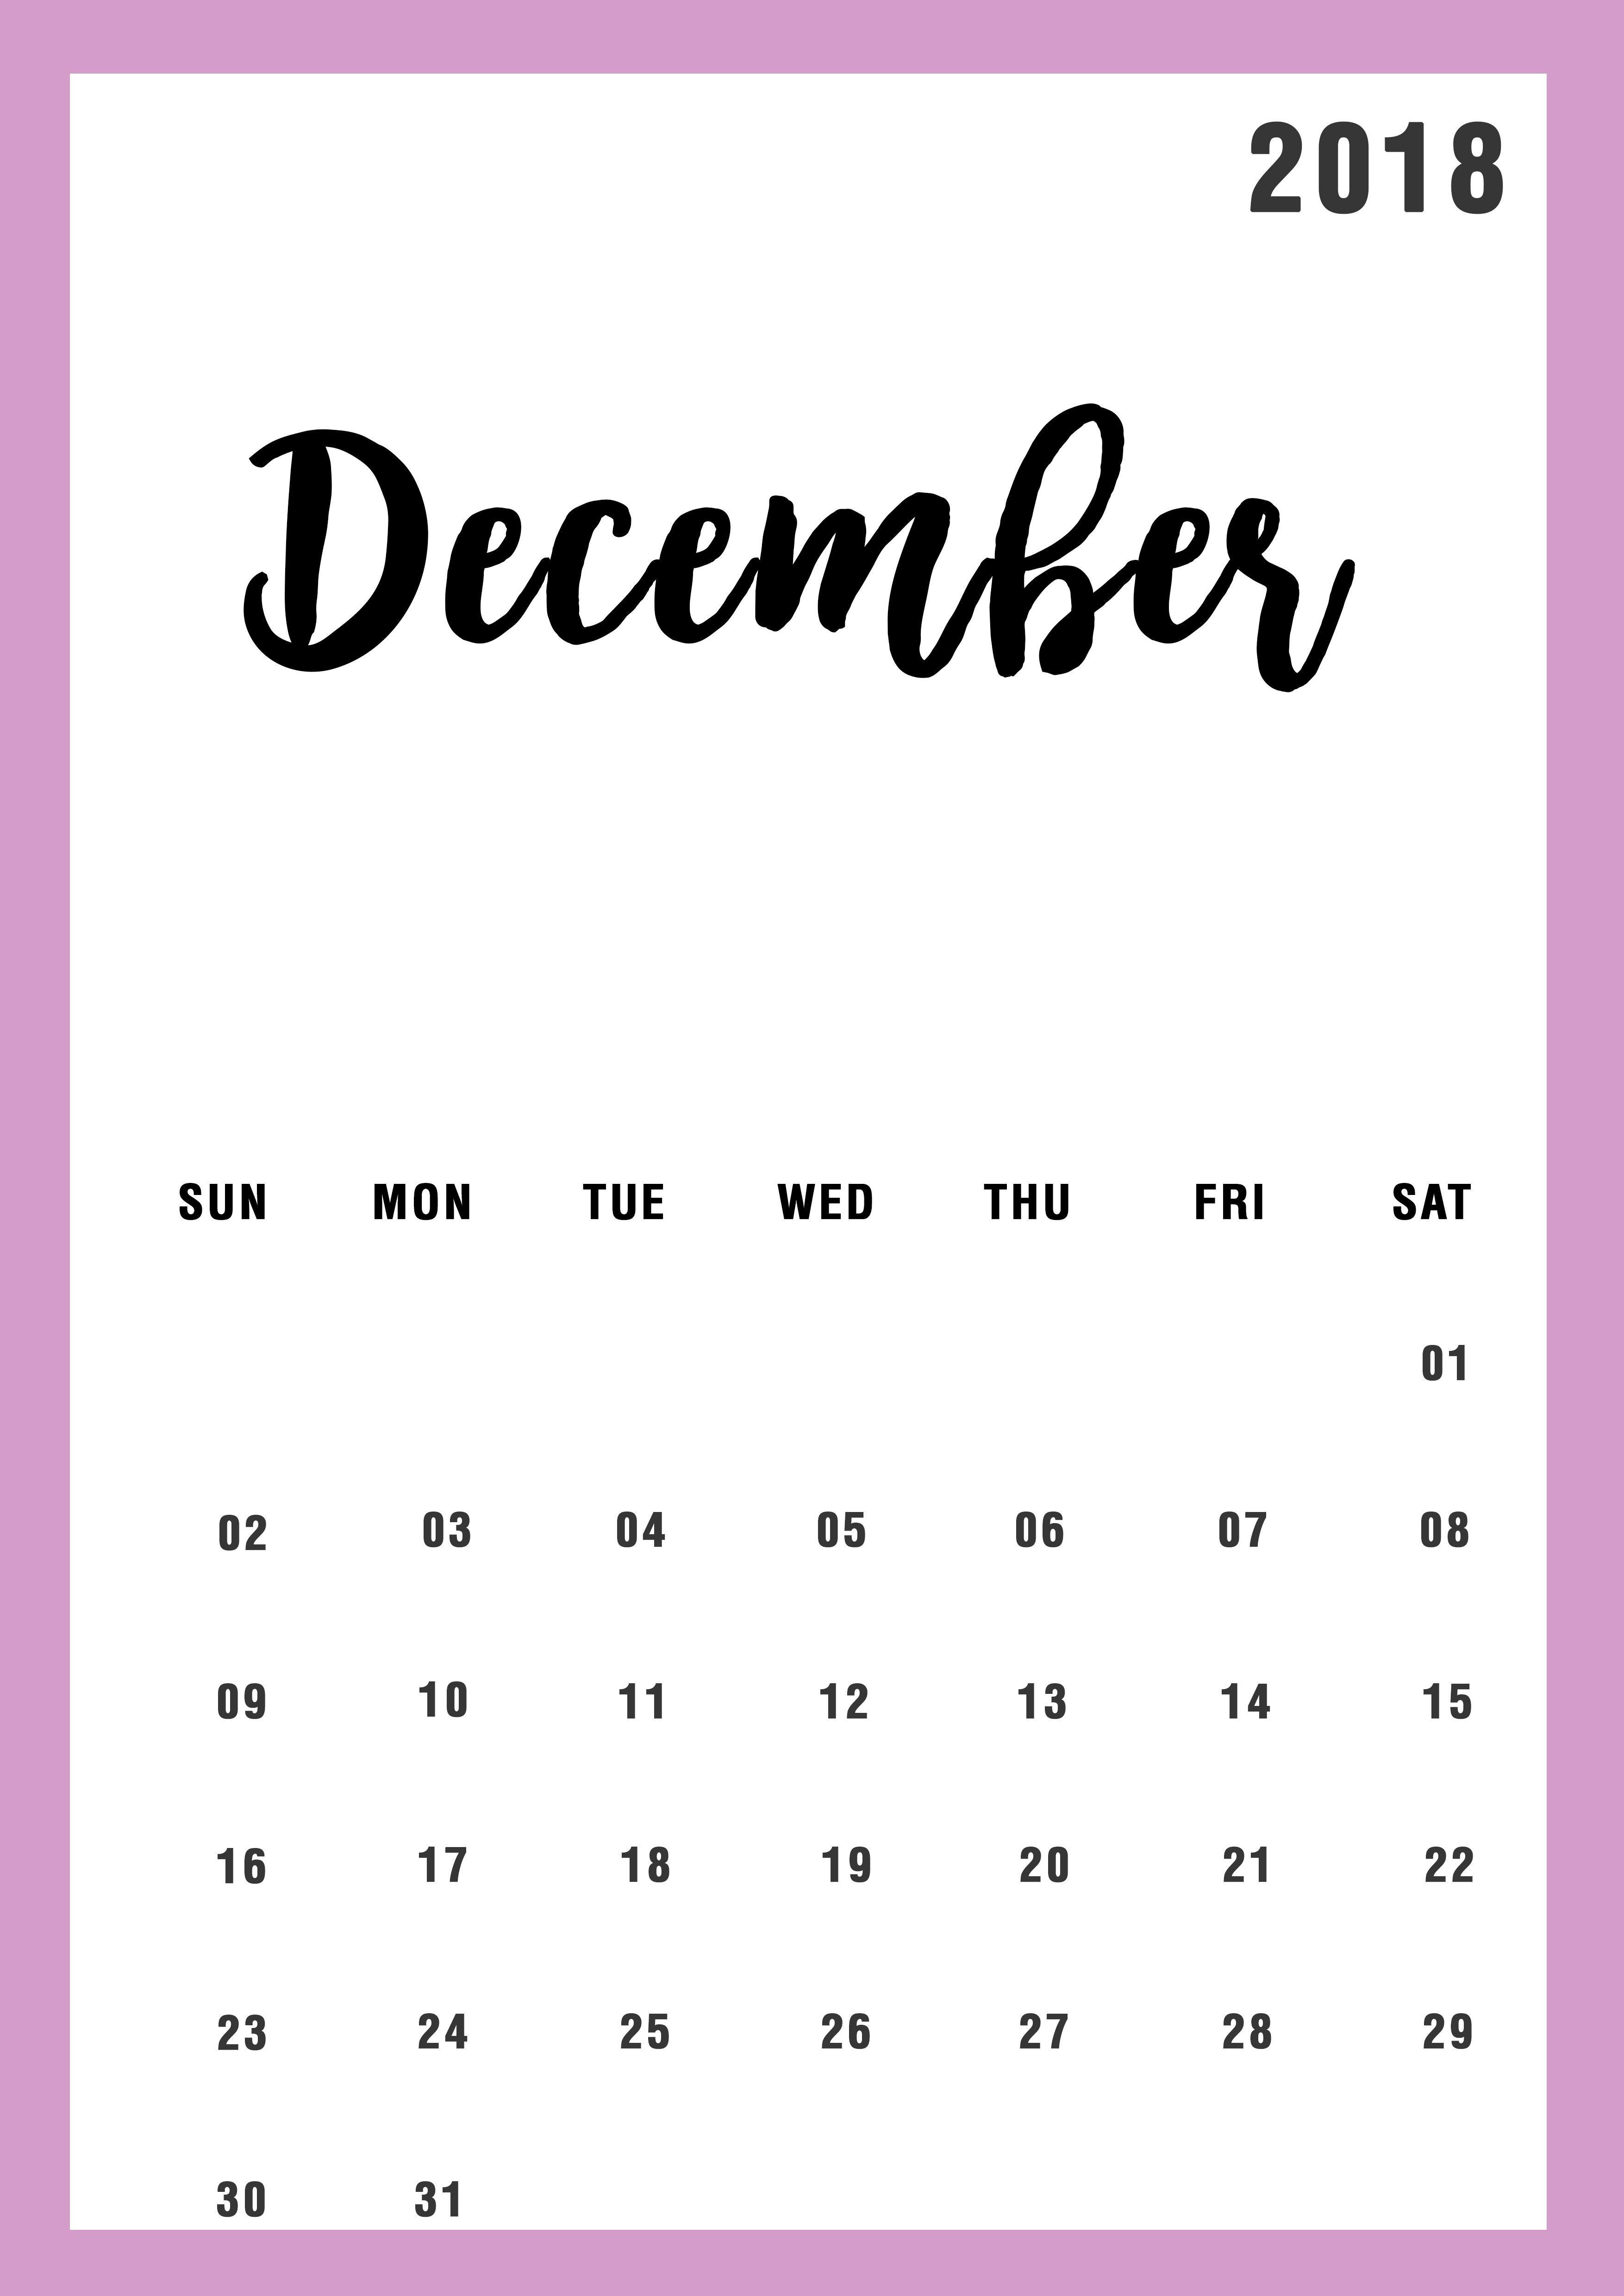 December 2018 Calendar design. My journal in 2018